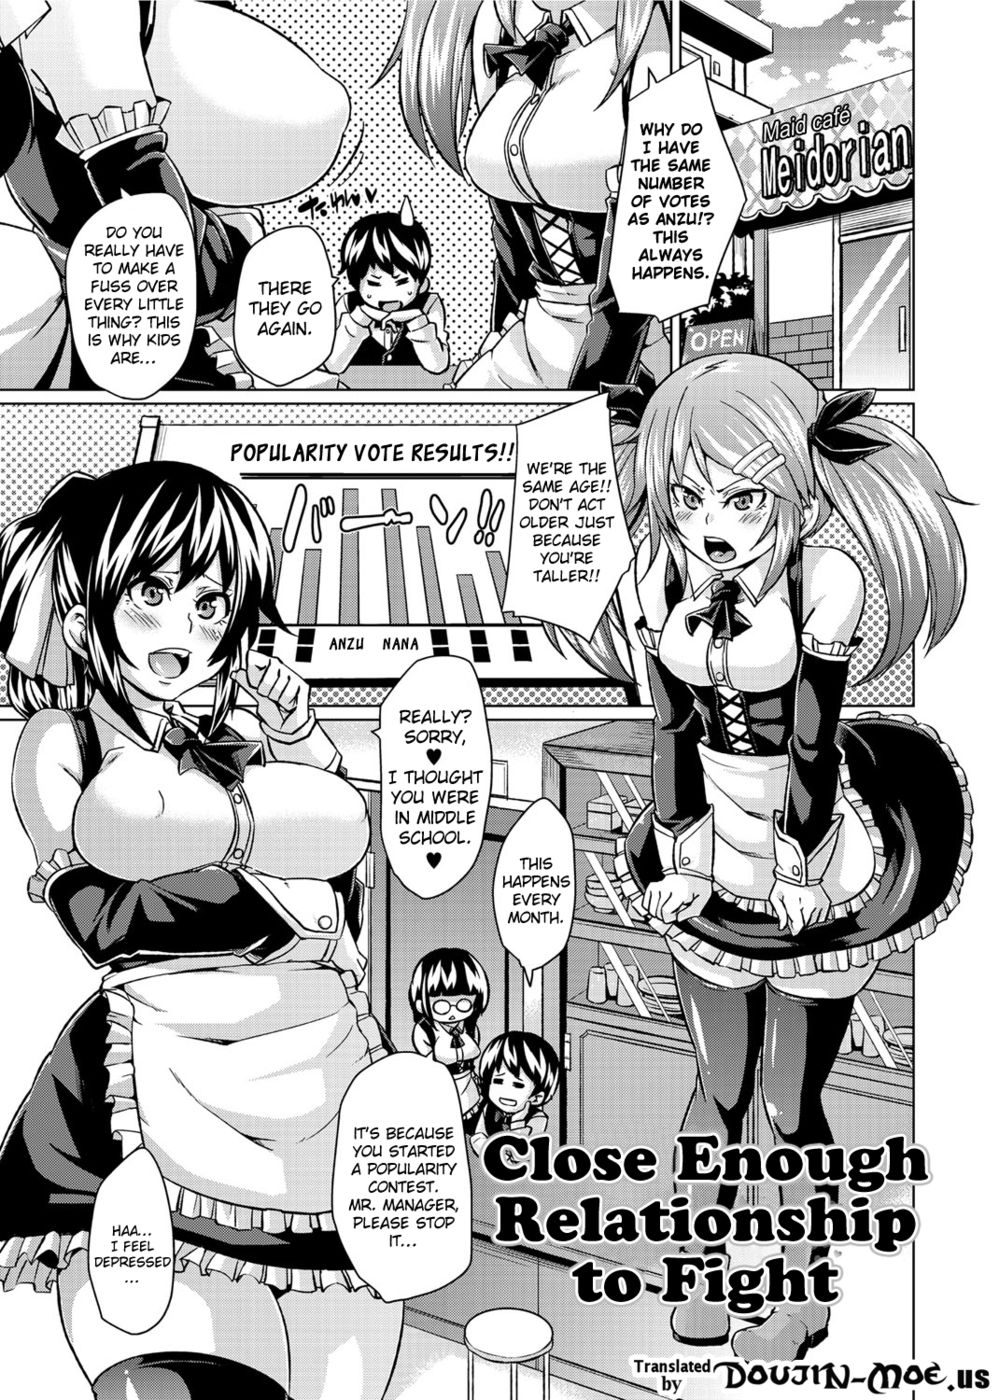 Hentai Manga Comic-Close Enough Relationship to Fight-Read-1